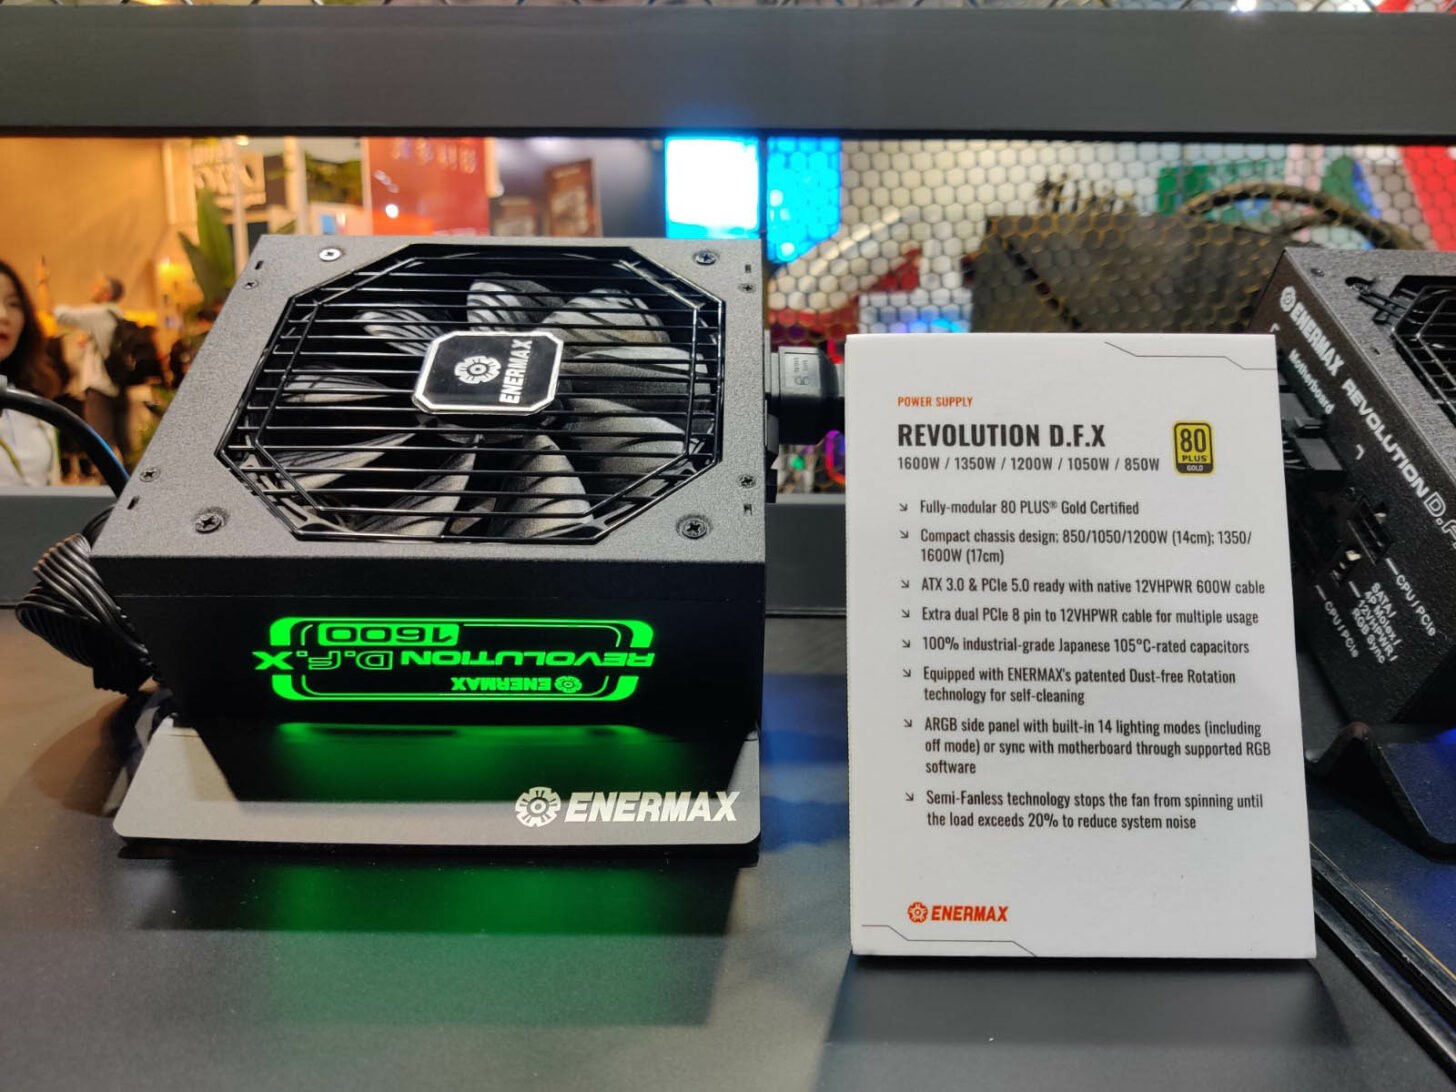 Enermax dünyanın ilk ATX 3.0 ve ATX12VO uyumlu PSU’sunu tanıttı